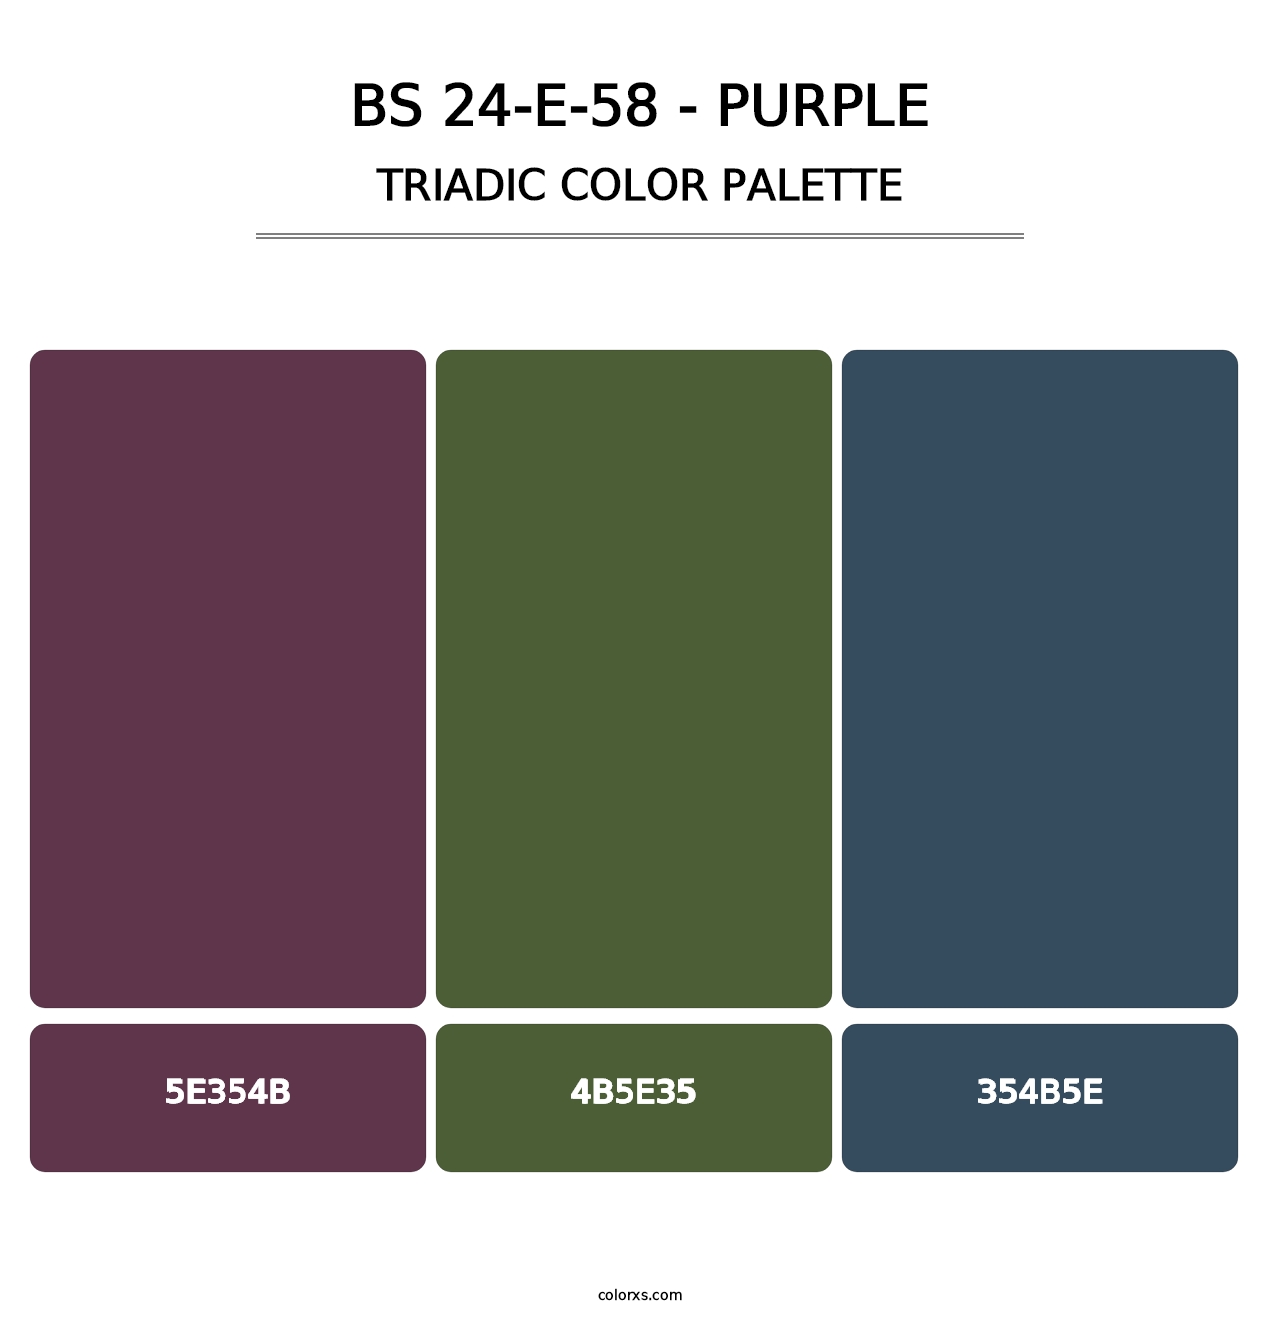 BS 24-E-58 - Purple - Triadic Color Palette